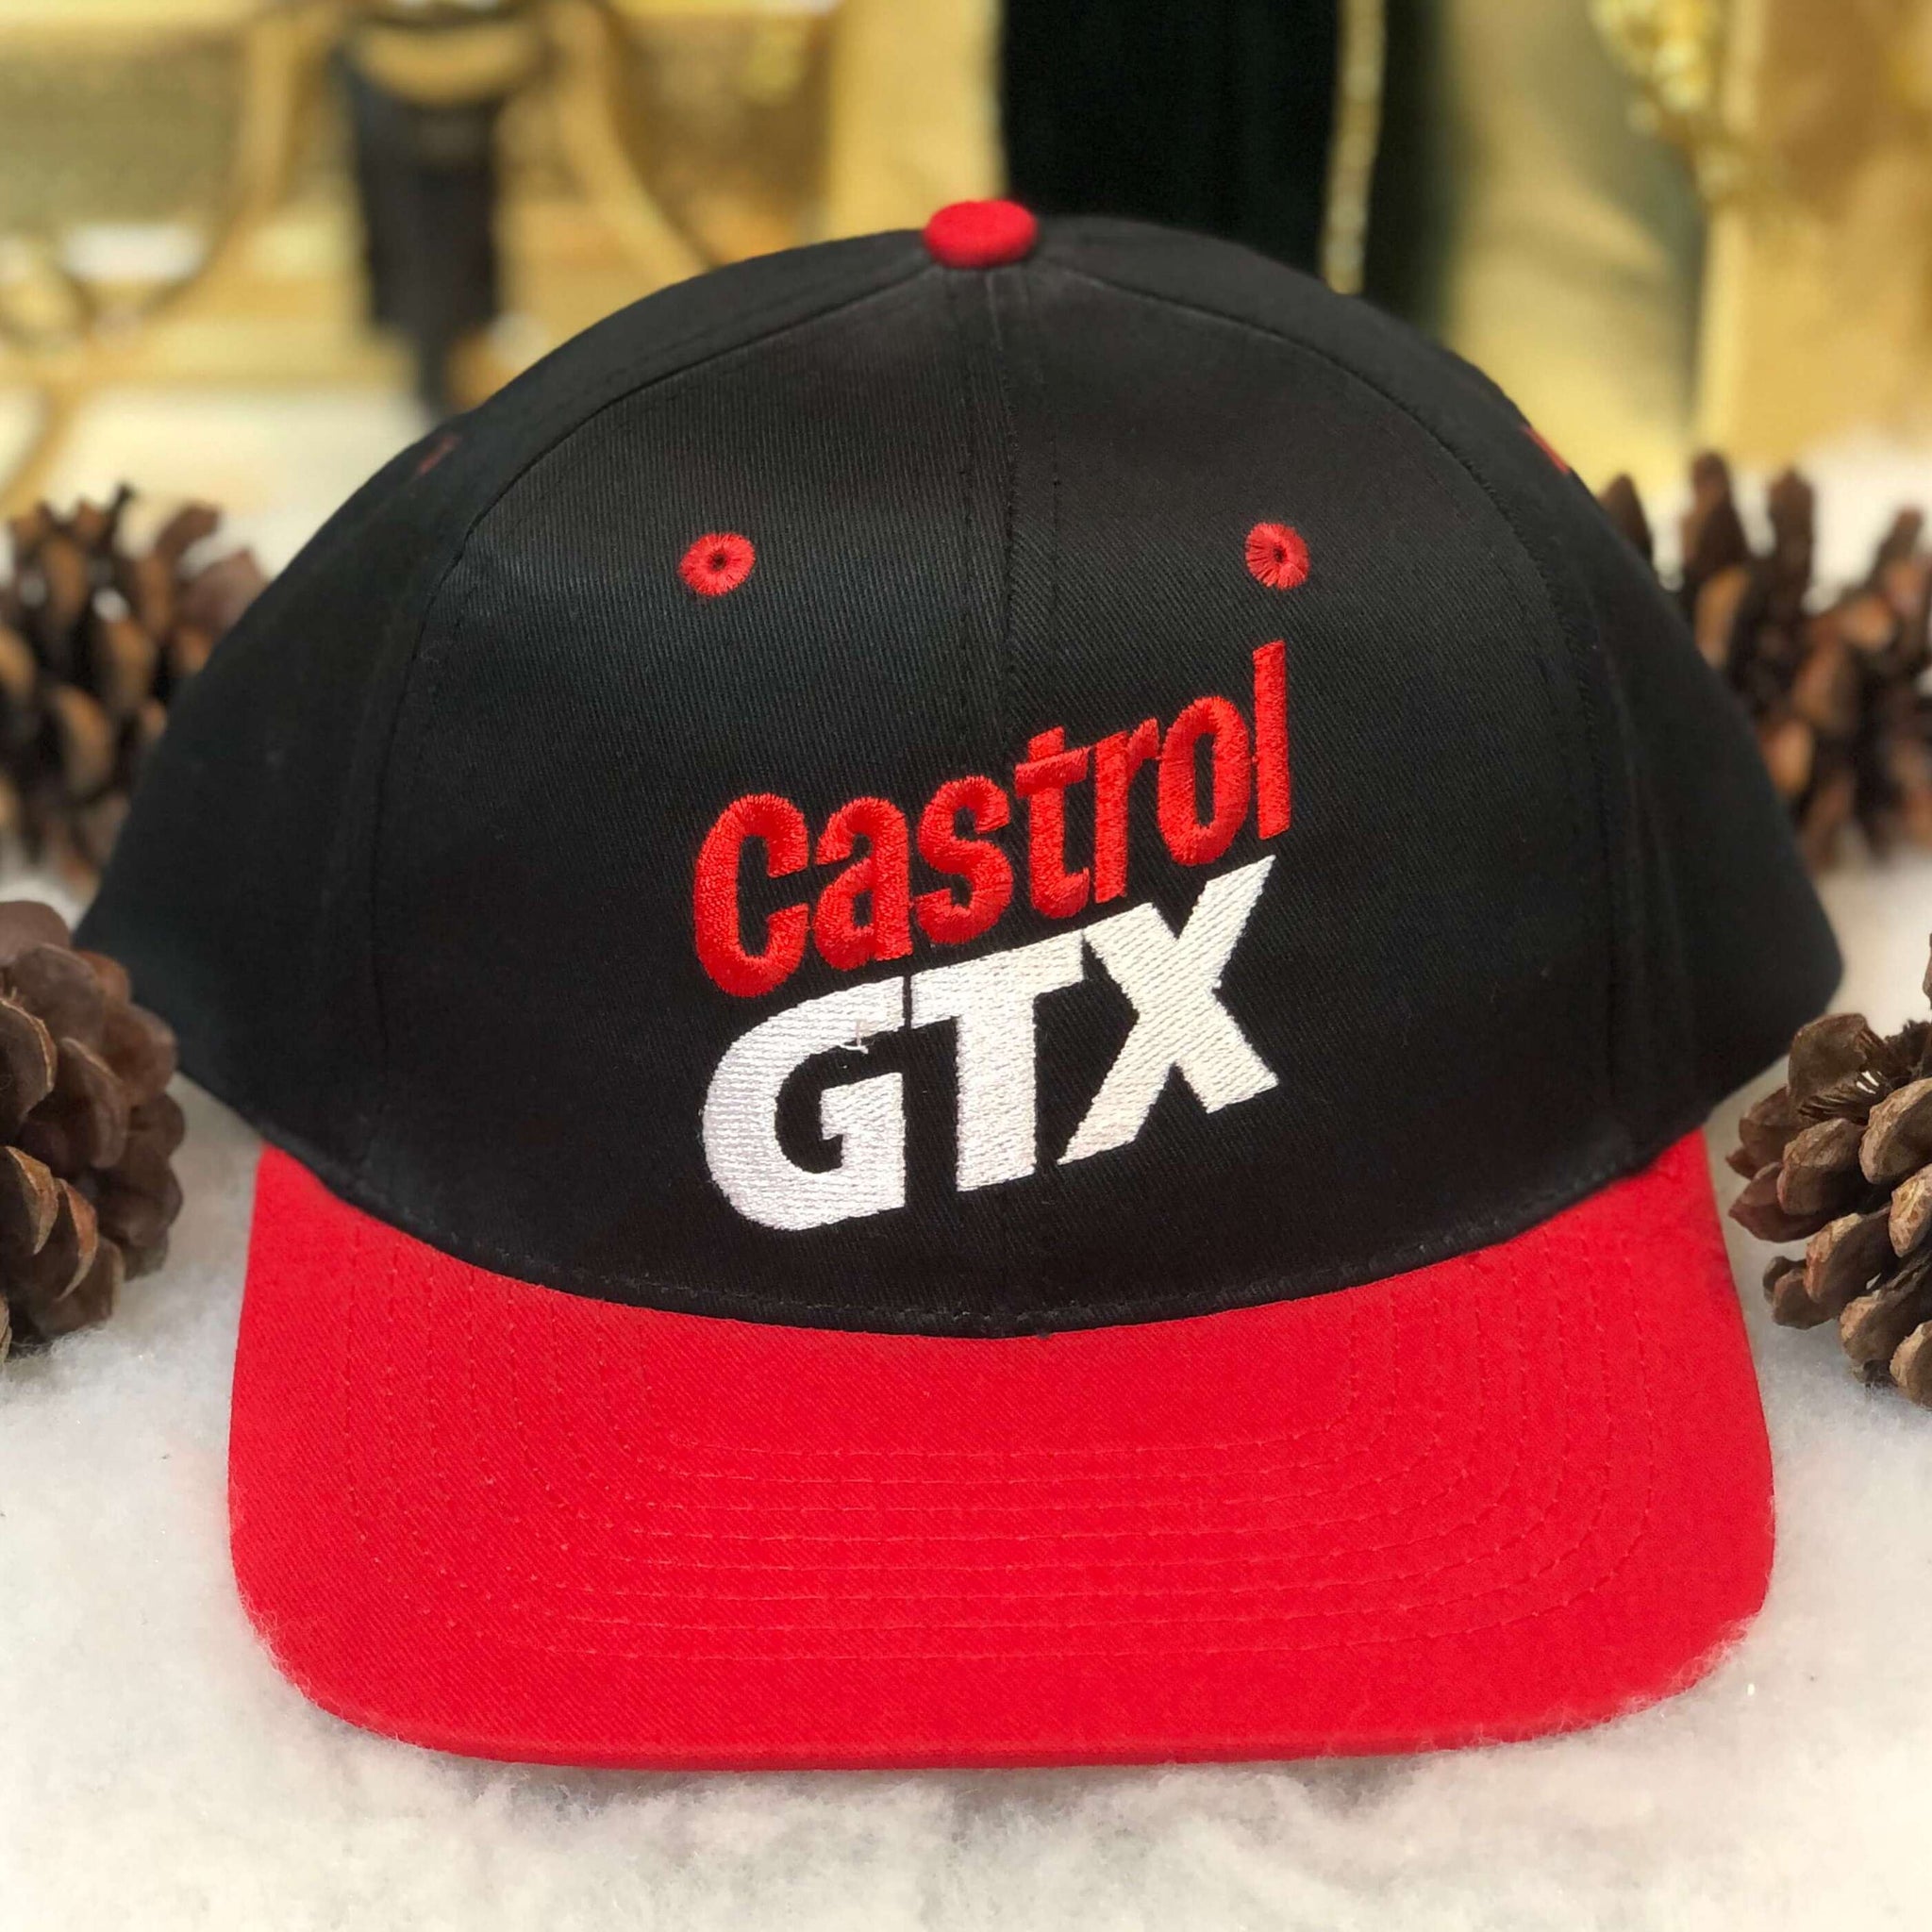 Vintage Deadstock NWOT Castrol GTX Twill Snapback Hat